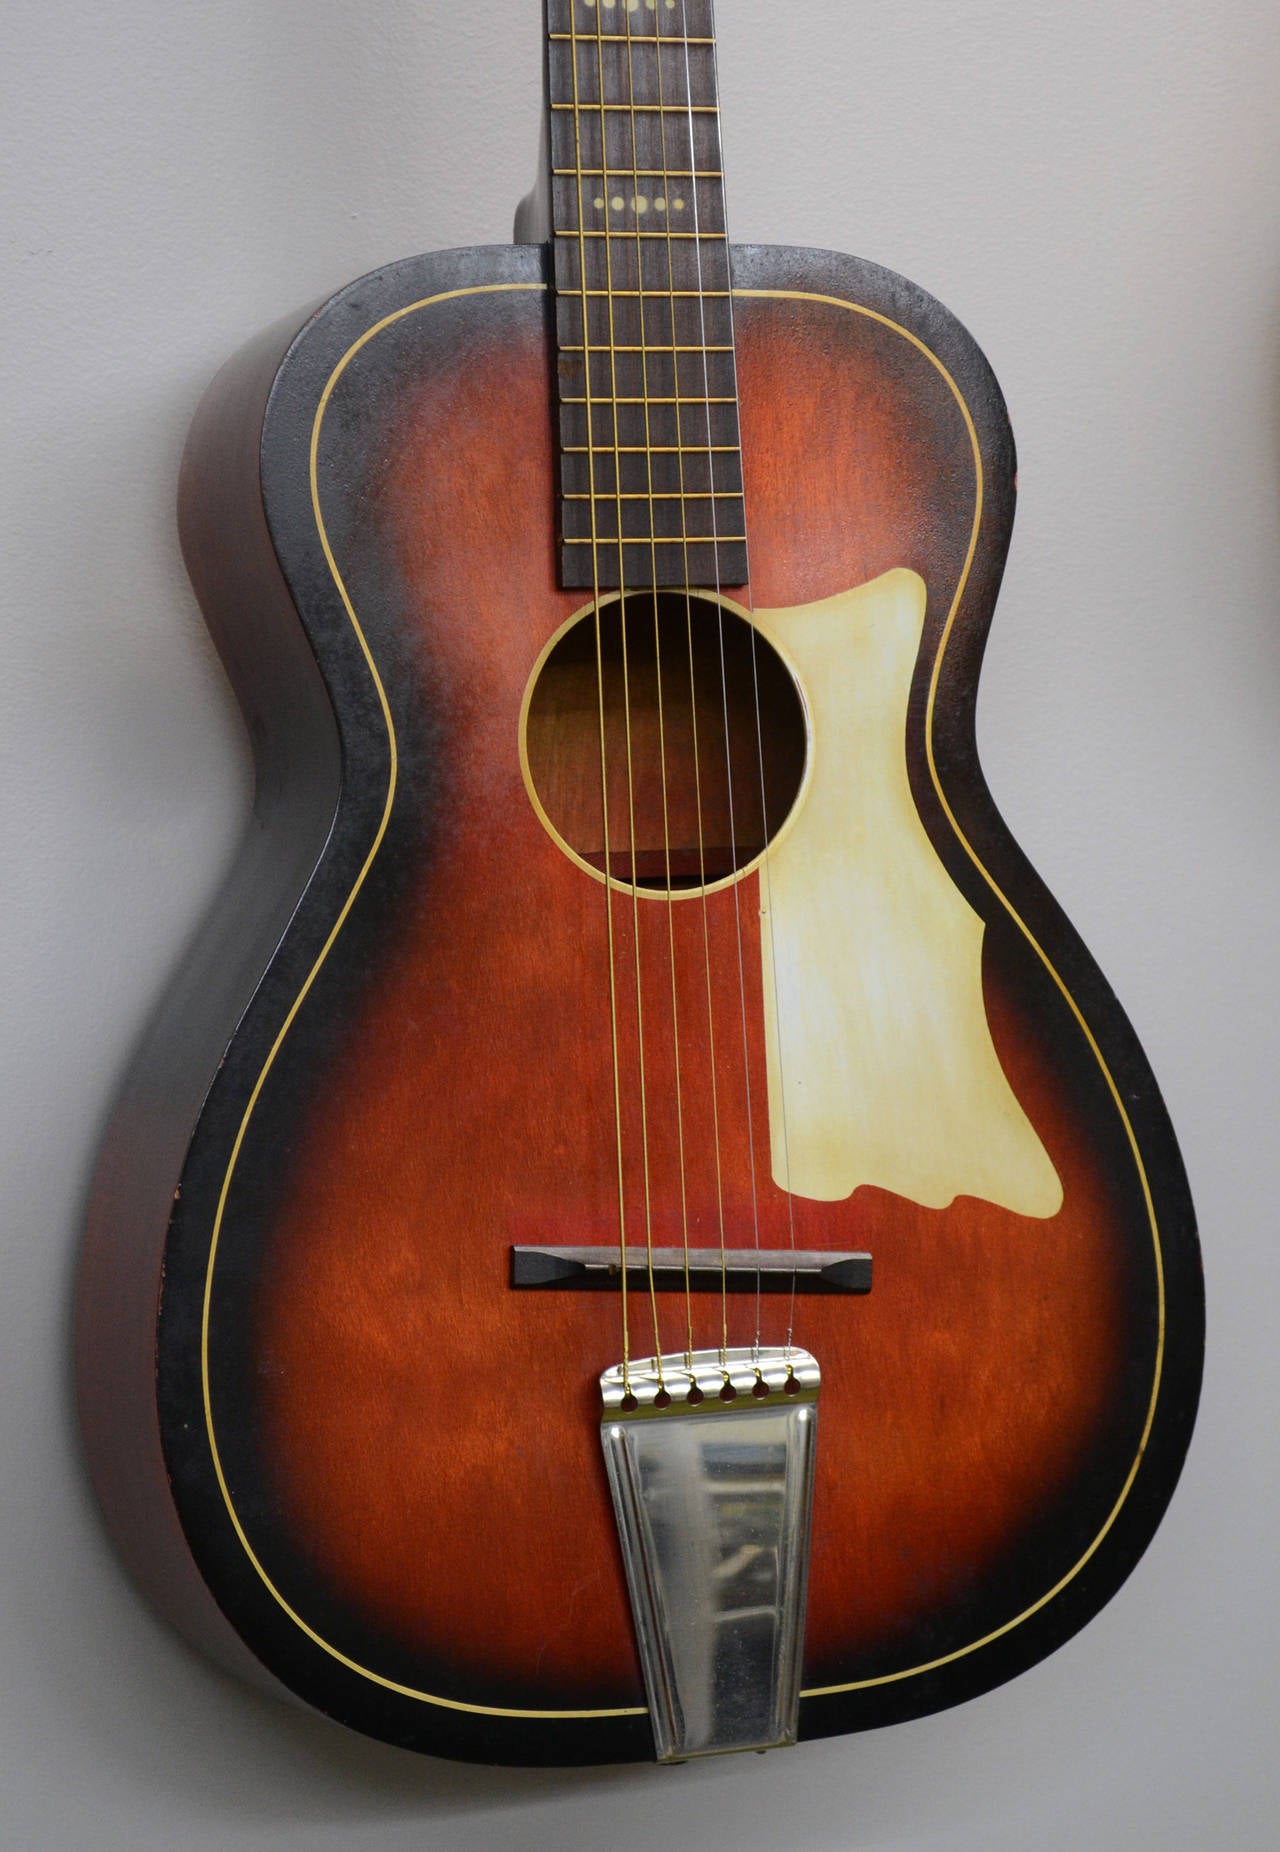 American Vintage Parlor Acoustic Guitar Collection